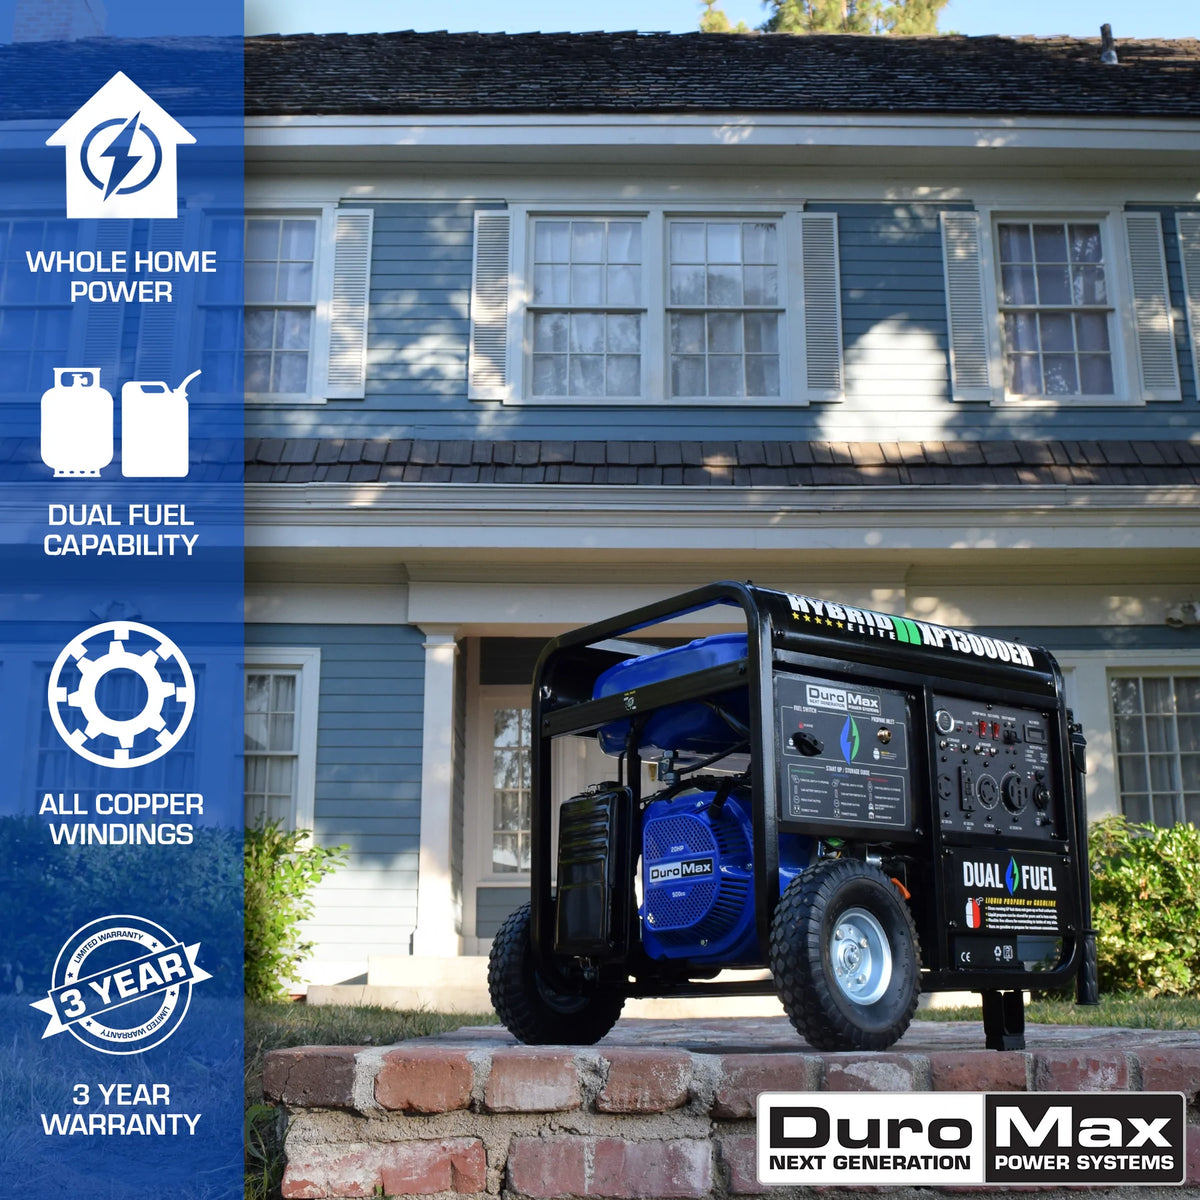 DuroMax XP13000E 13,000-Watt/10,500-Watt 500cc Electric Start Gas Powered Portable Generator